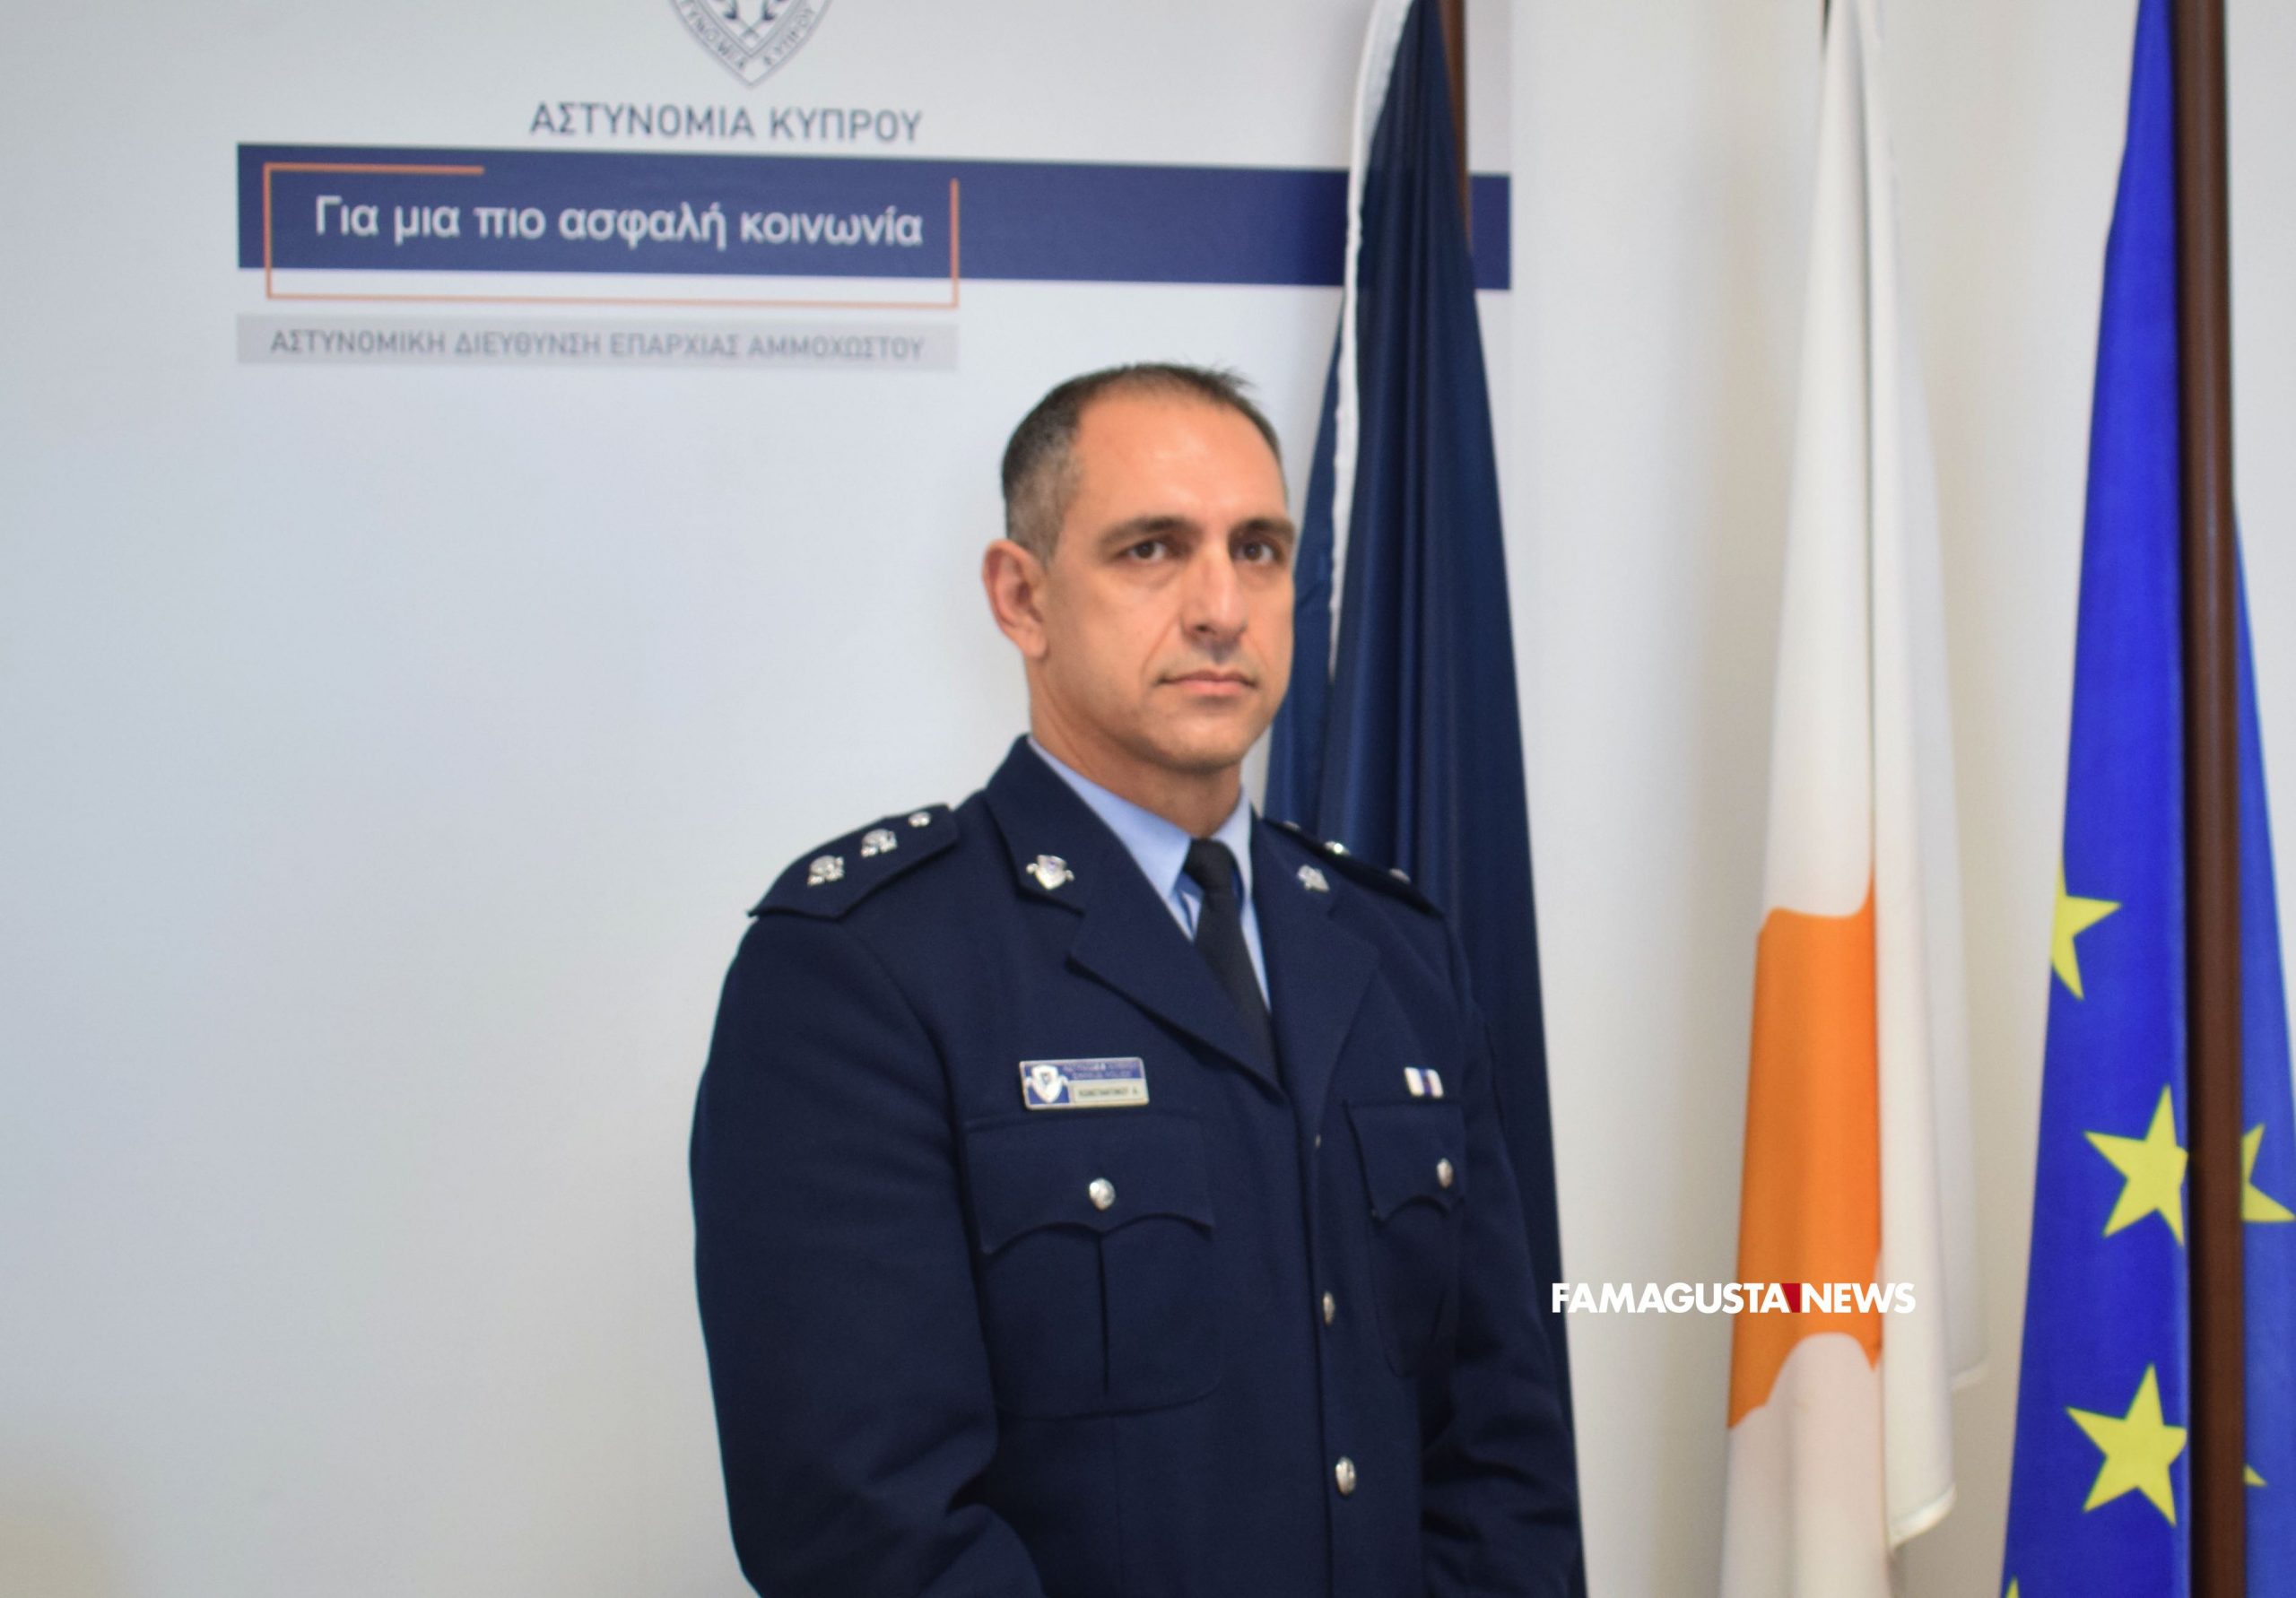 DSC 6801 scaled Coronavirus, exclusive, Andreas Konstantinou, Police, Famagusta Police Department